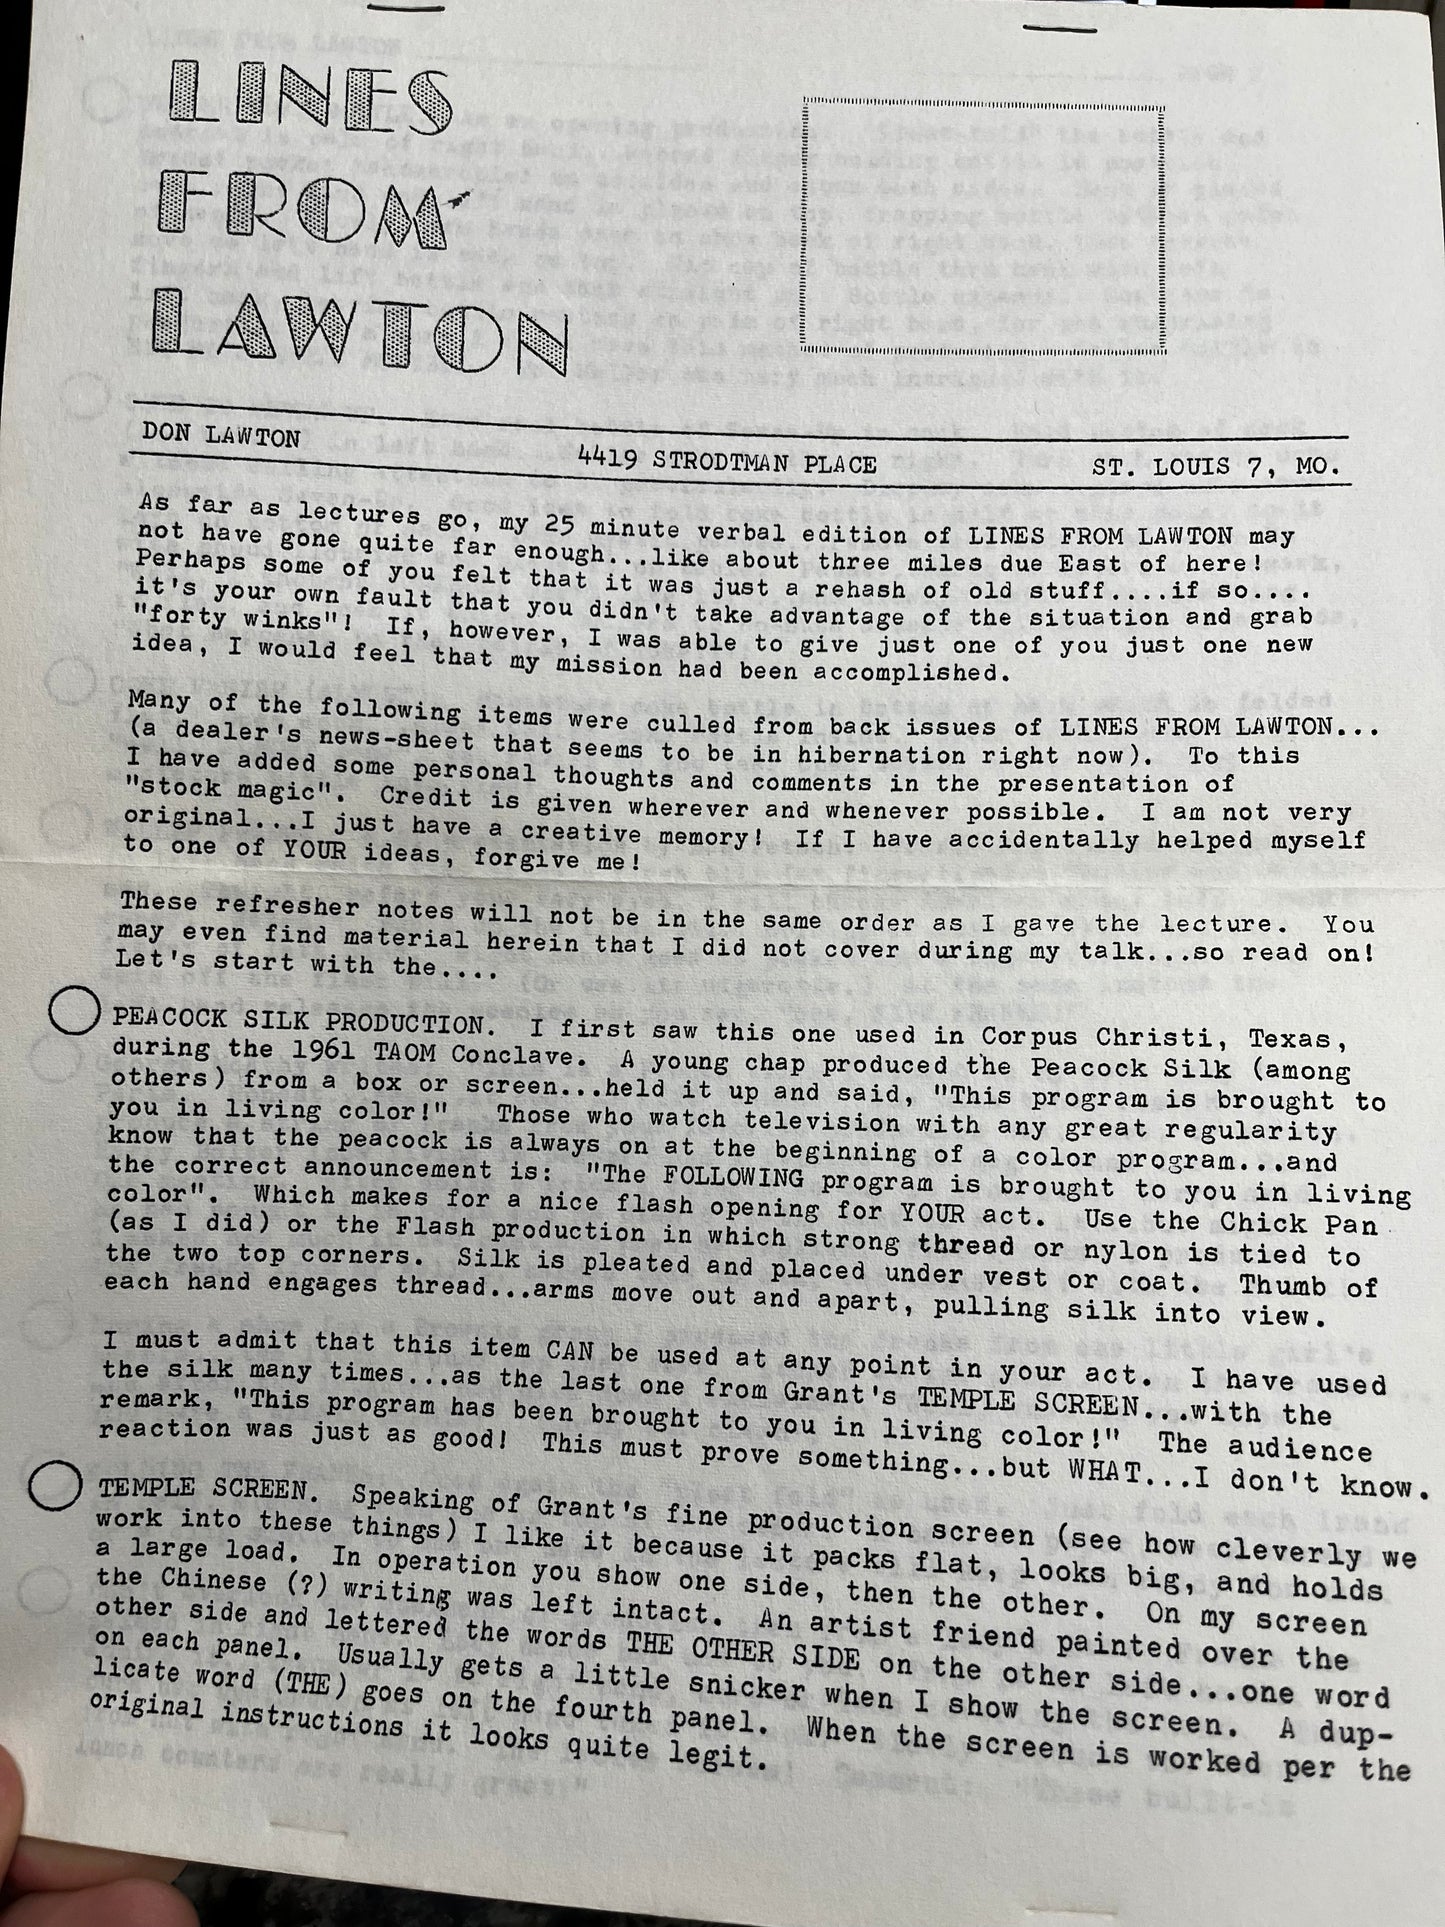 Lawton Lecture Notes - Don Lawton